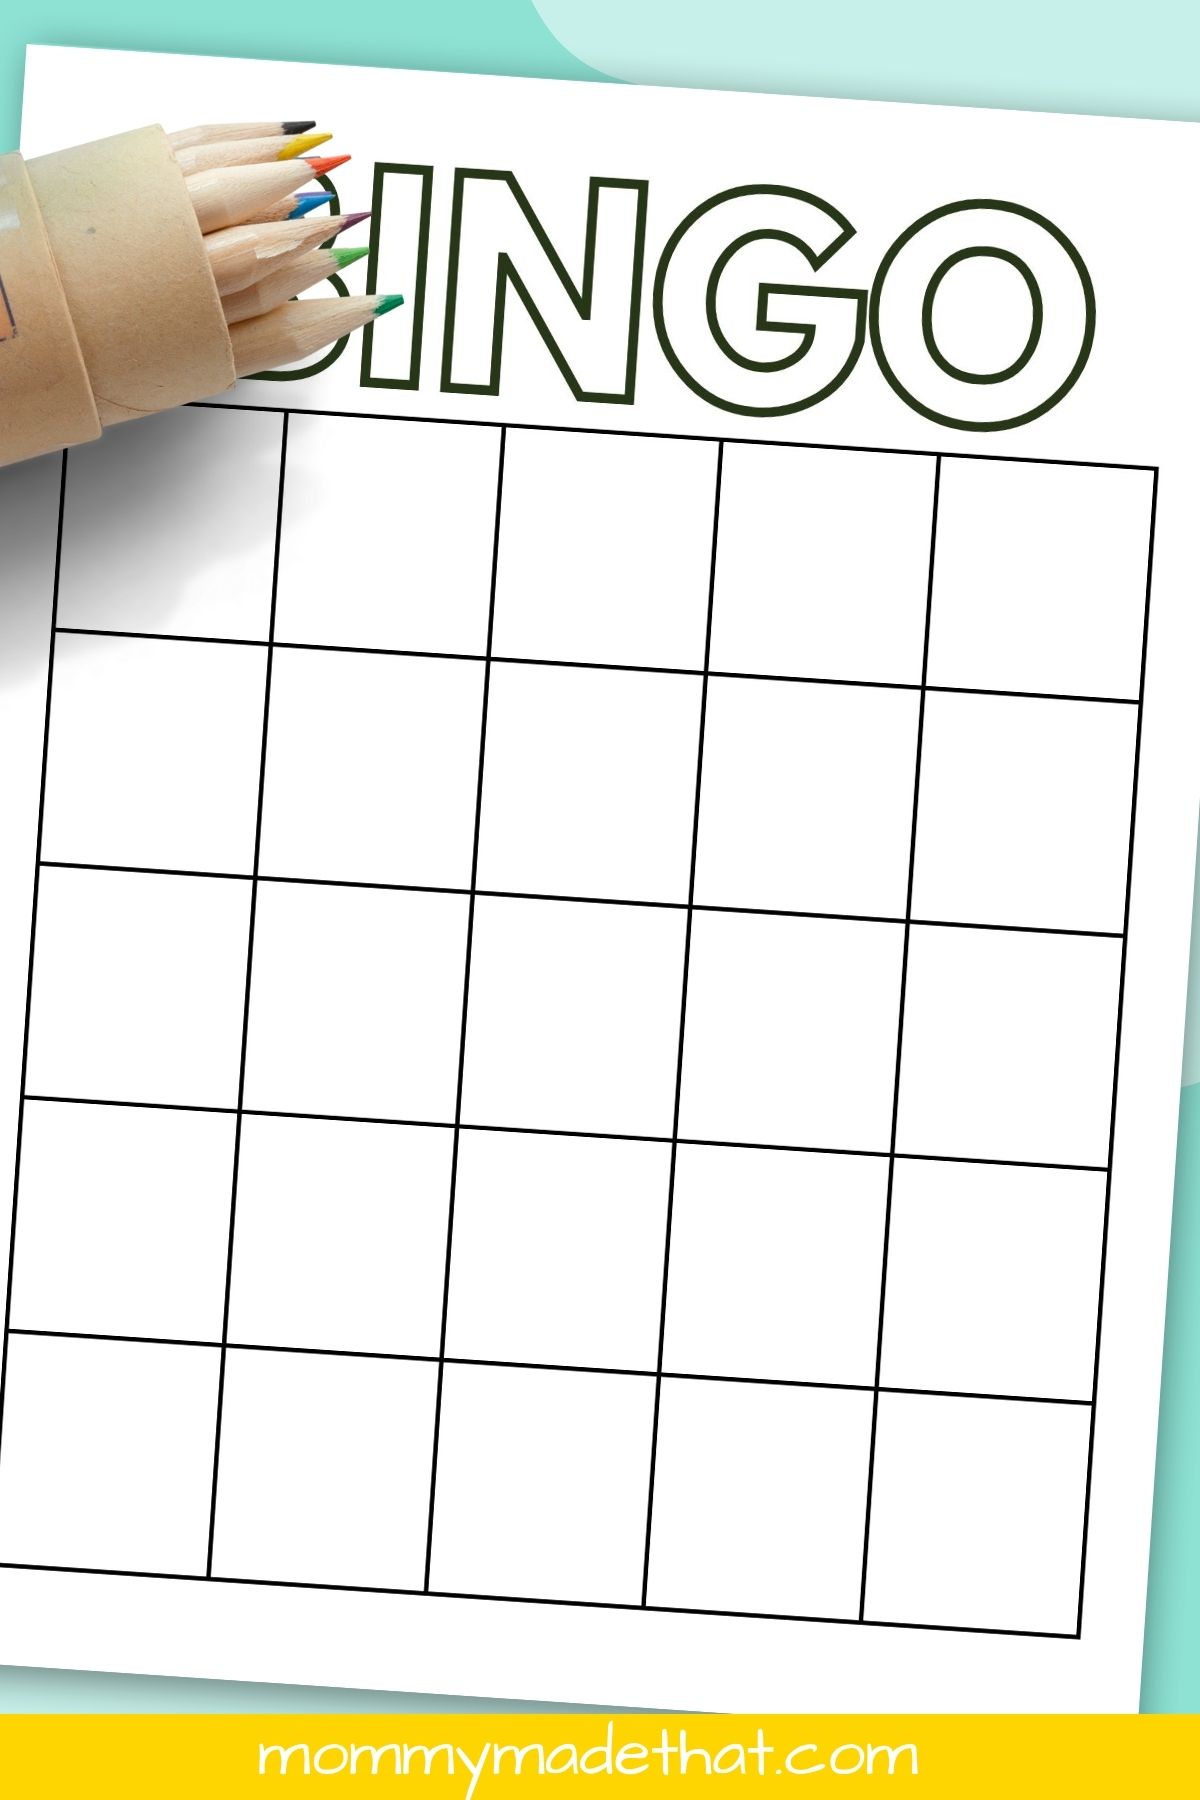 Bingo card template